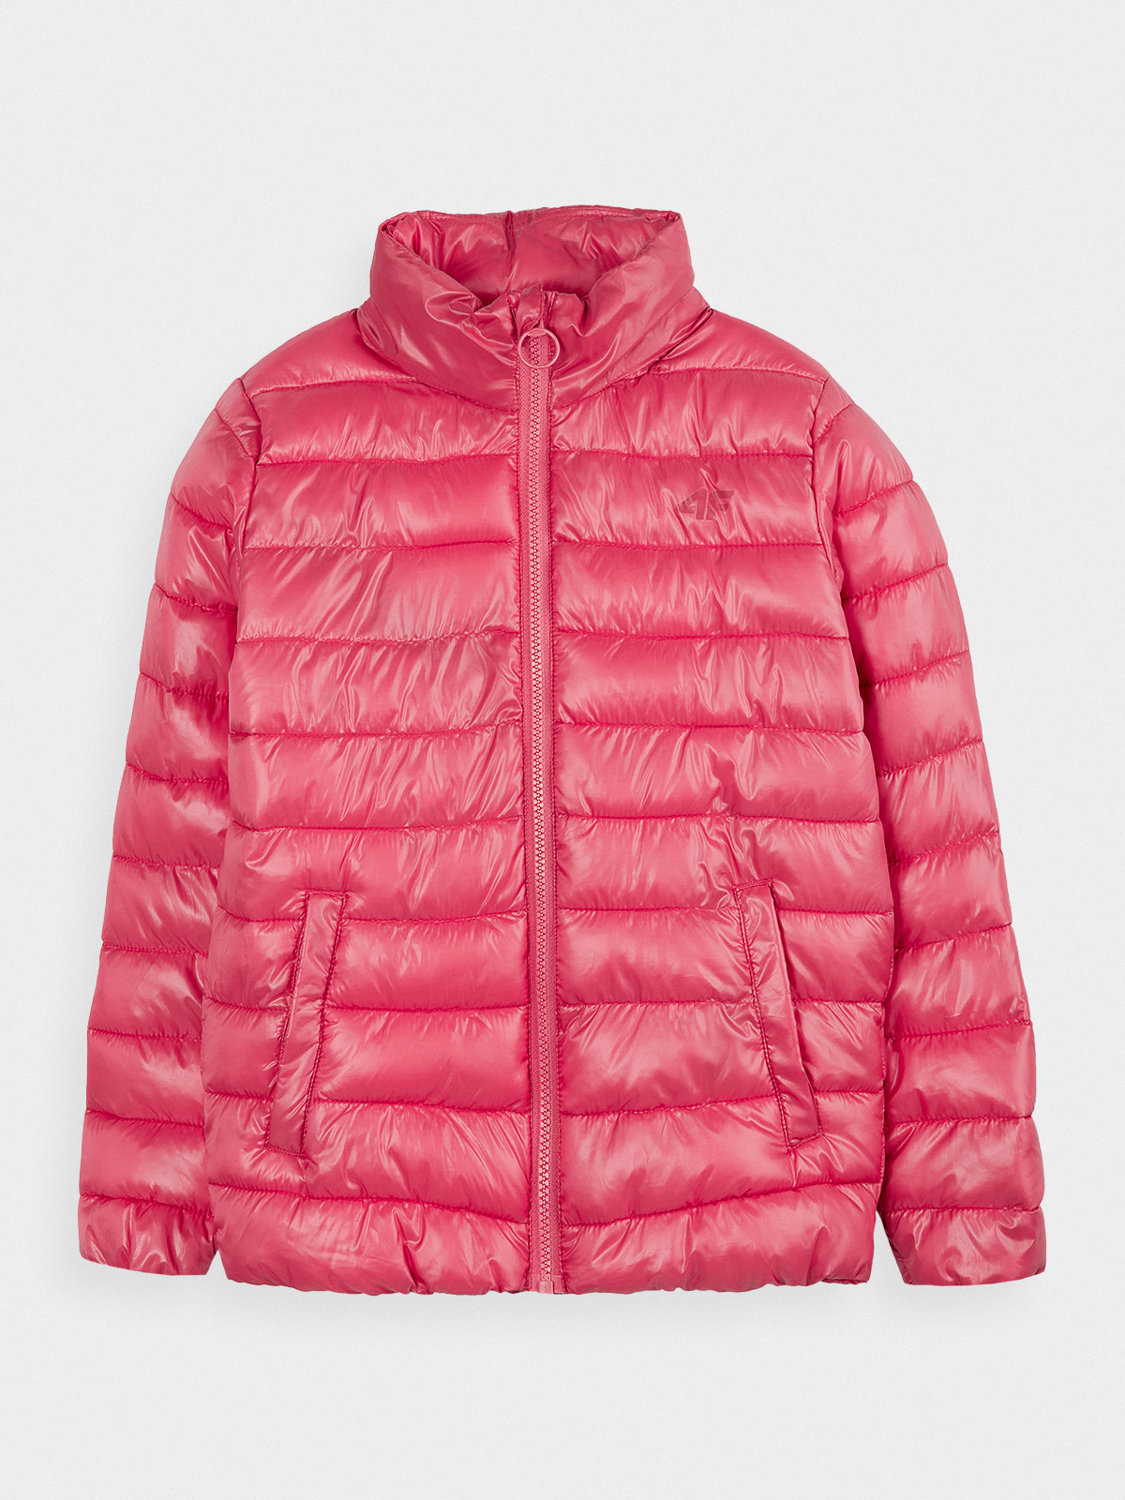 Куртка 4F GIRL'S JACKET HJL21-JKUDP001-53S цв.розовый р. 134